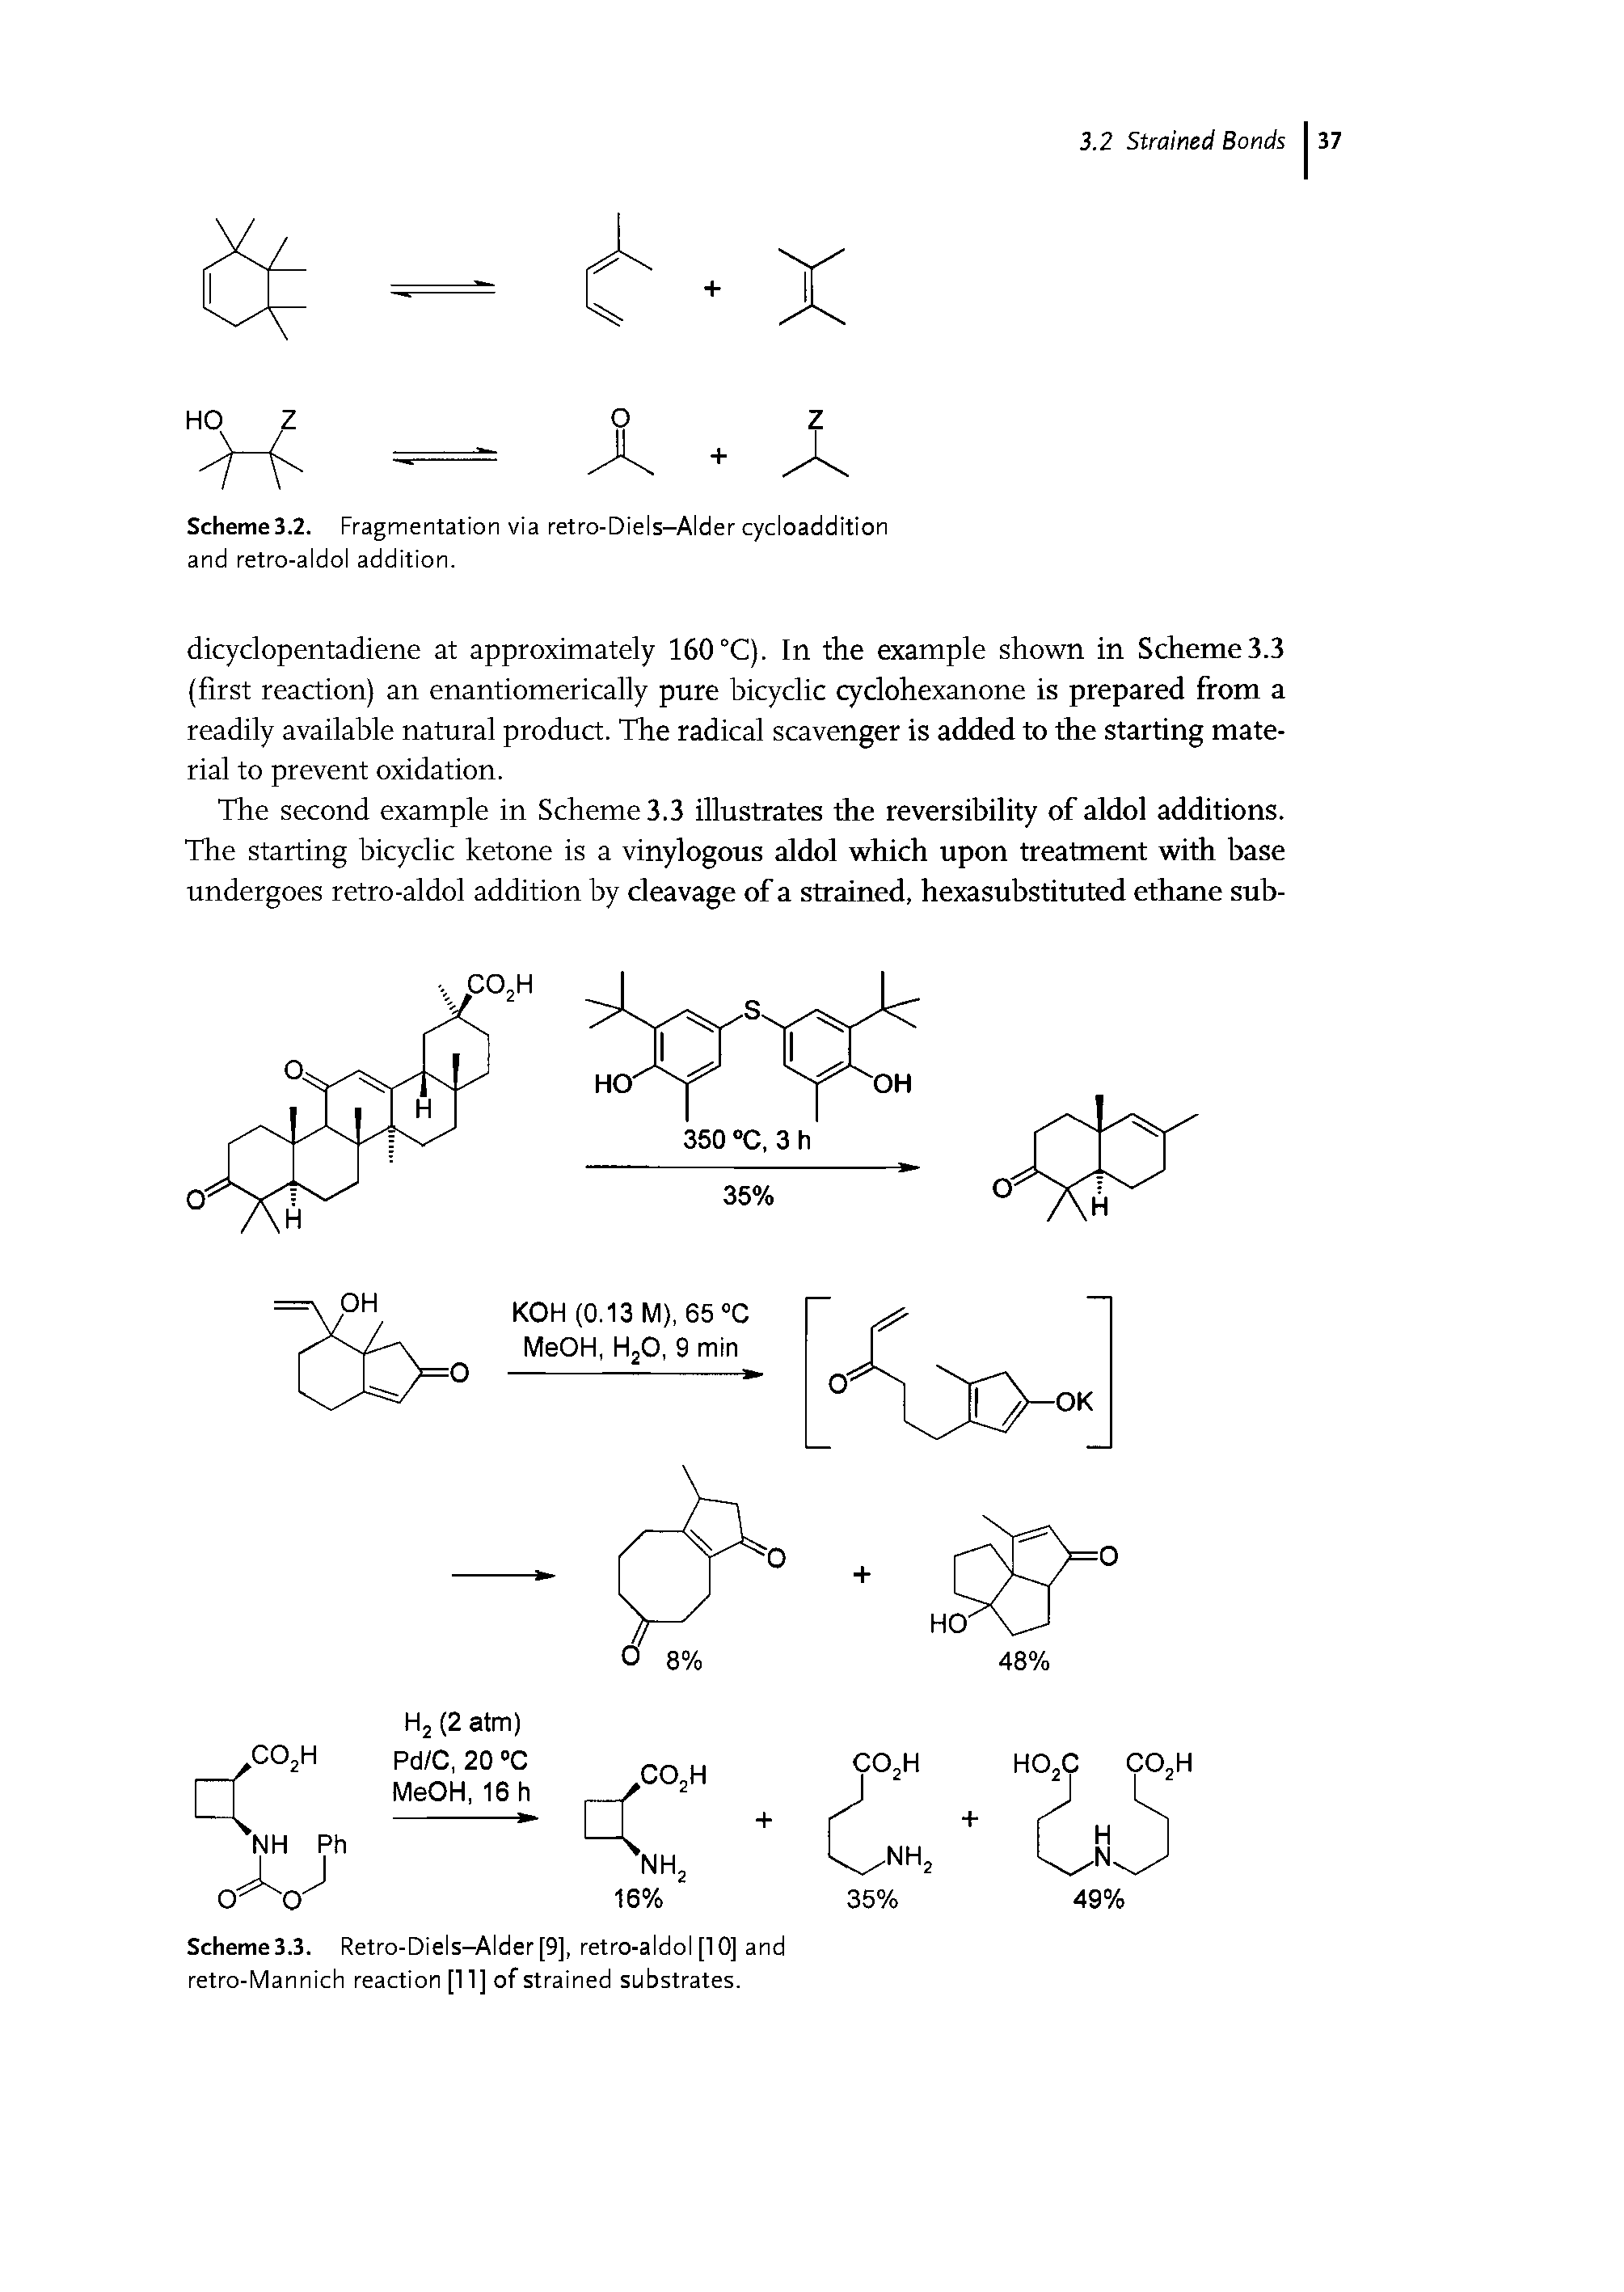 Scheme3.3. Retro-Diels-Alder [9], retro-aldol [10] and retro-Mannich reaction [11] of strained substrates.